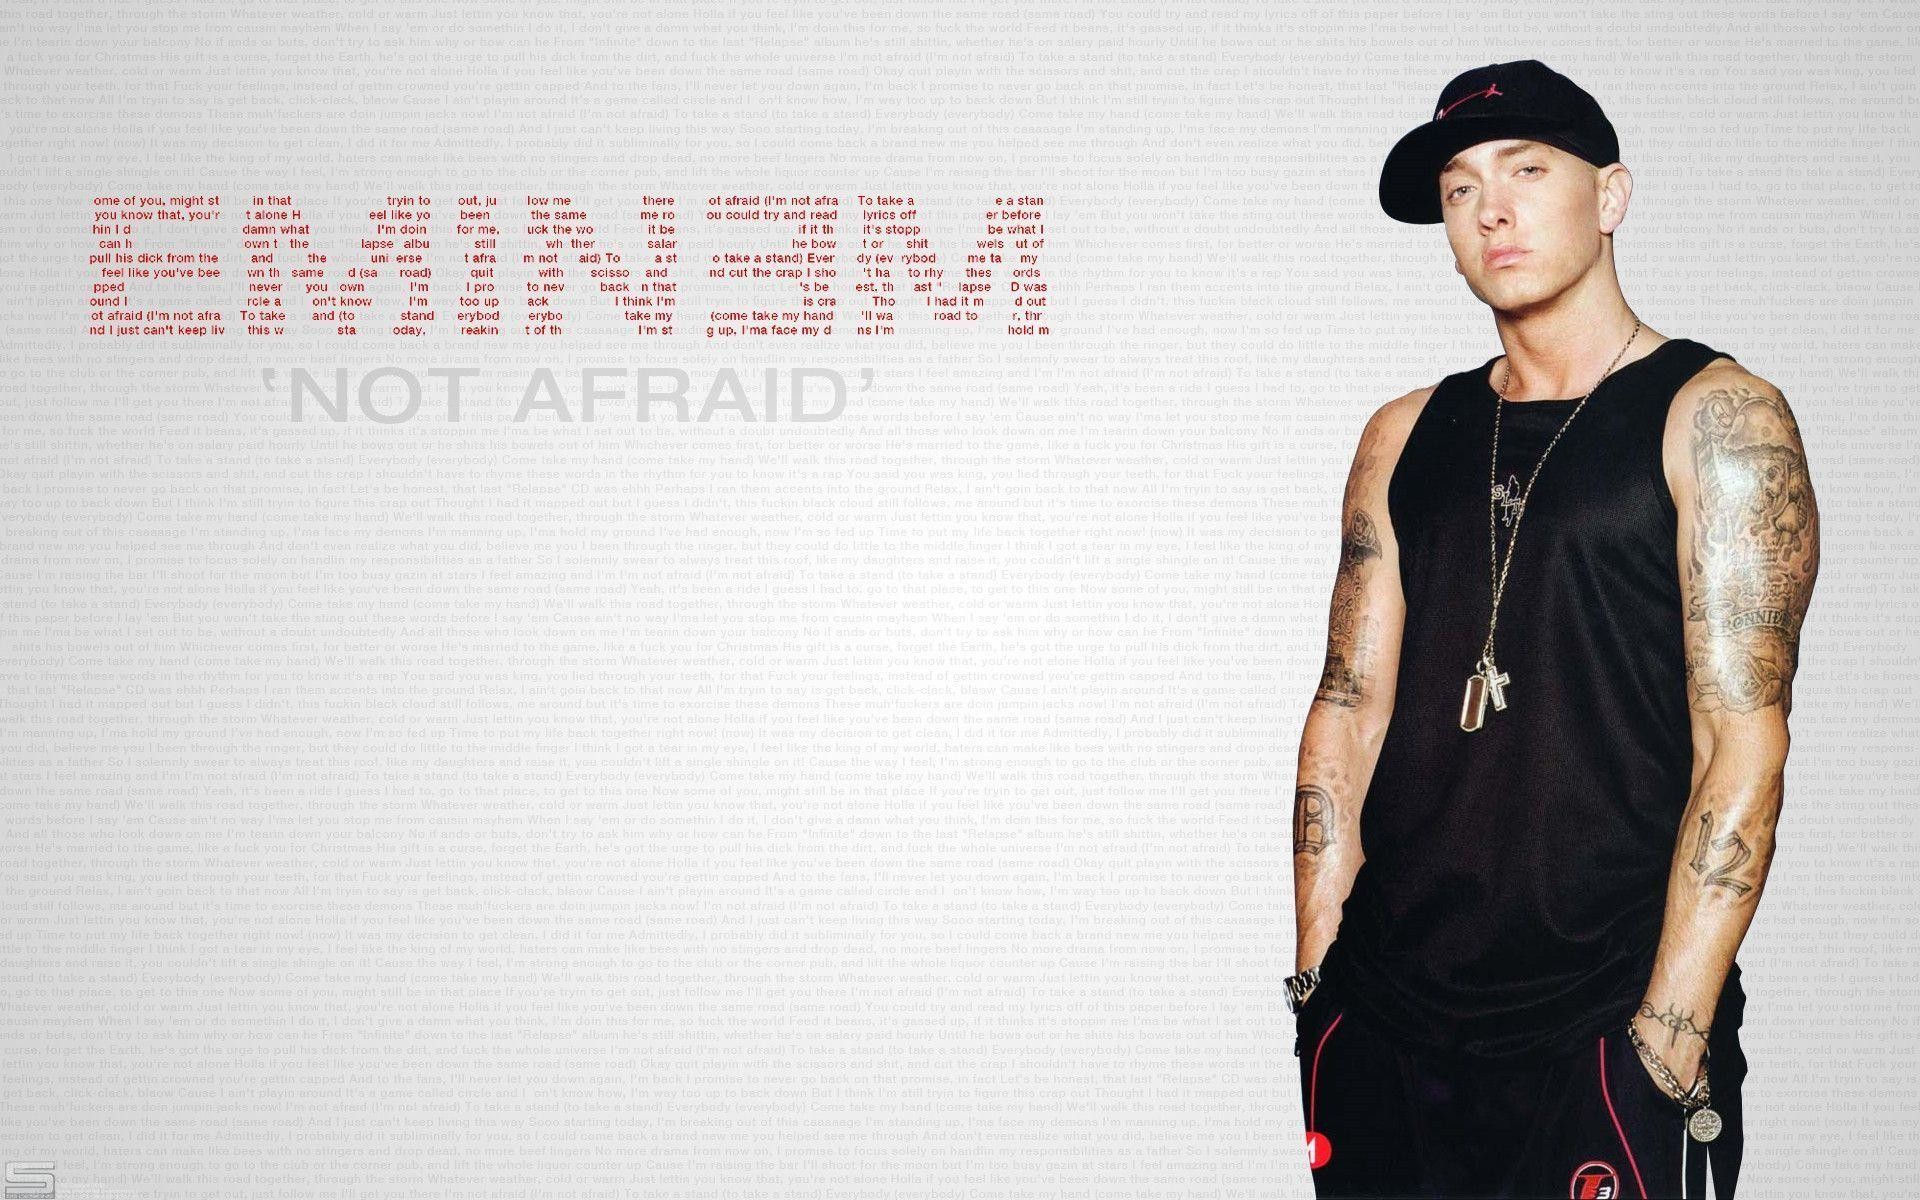 Eminem Free Wallpapers